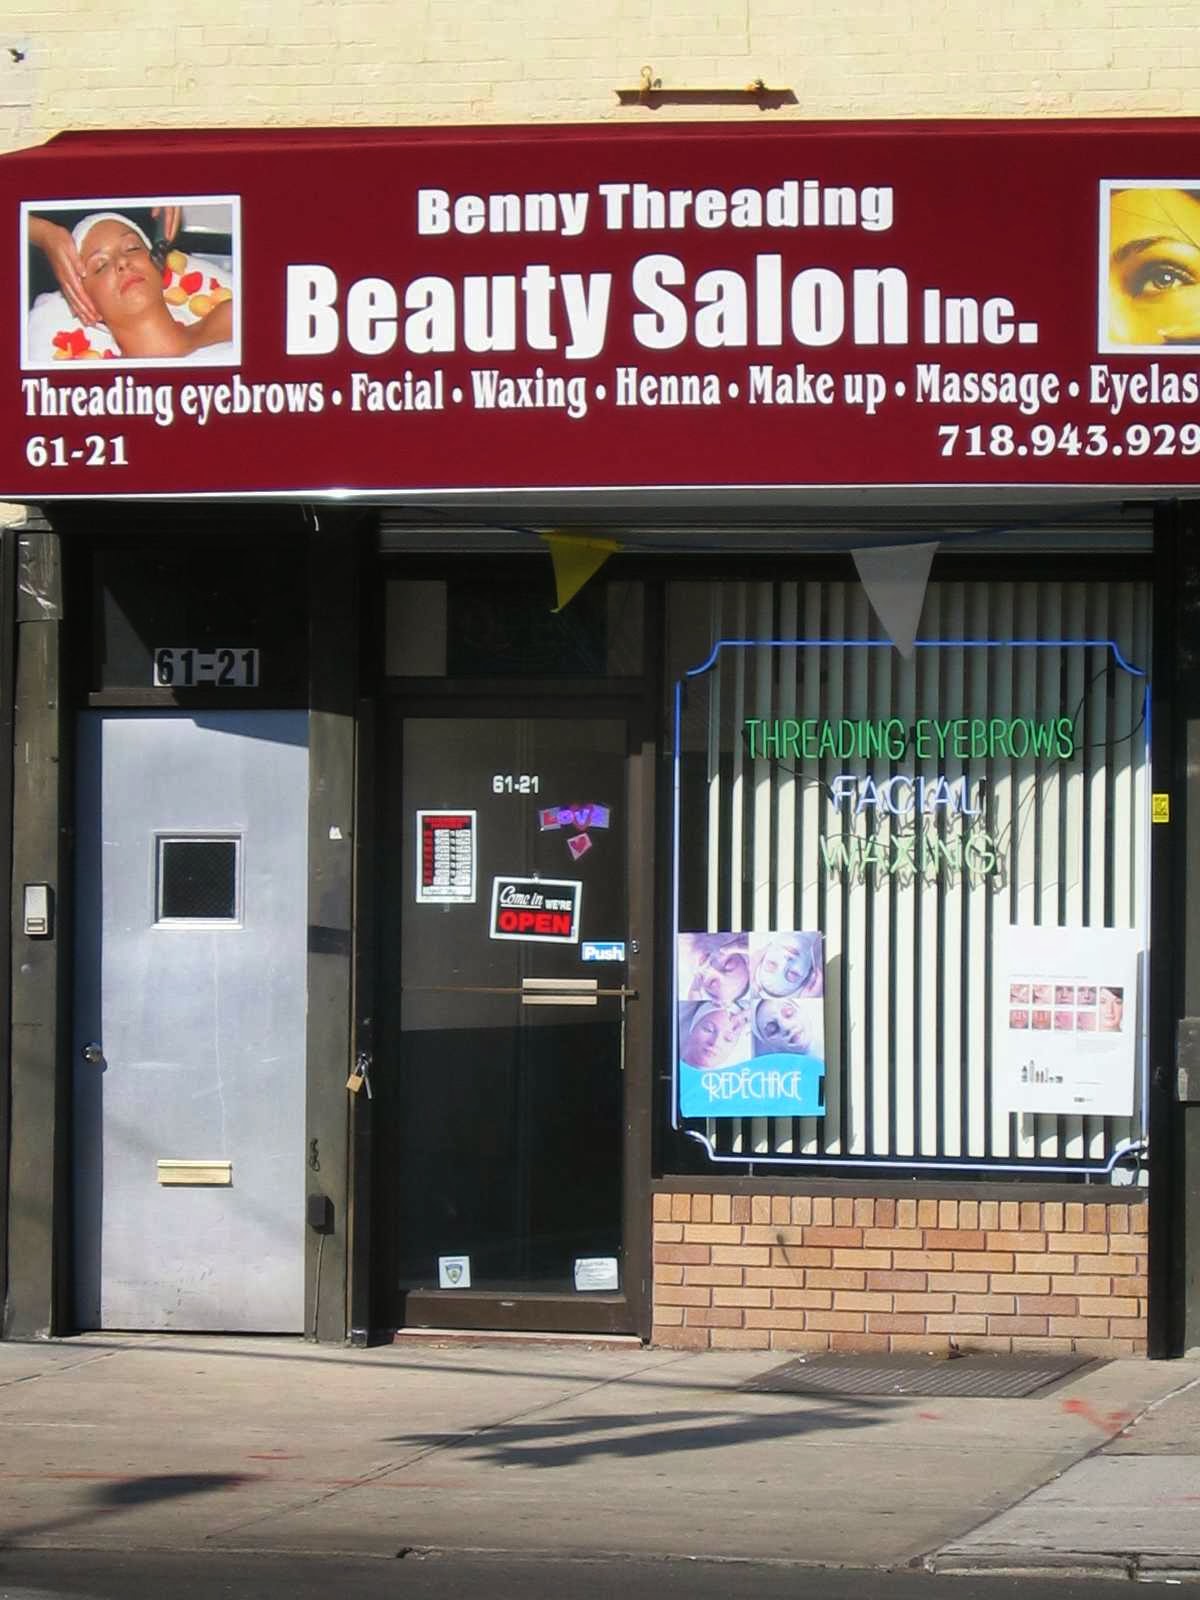 Photo of Benny Threading Beauty Salon Inc. in Ridgewood City, New York, United States - 2 Picture of Point of interest, Establishment, Beauty salon